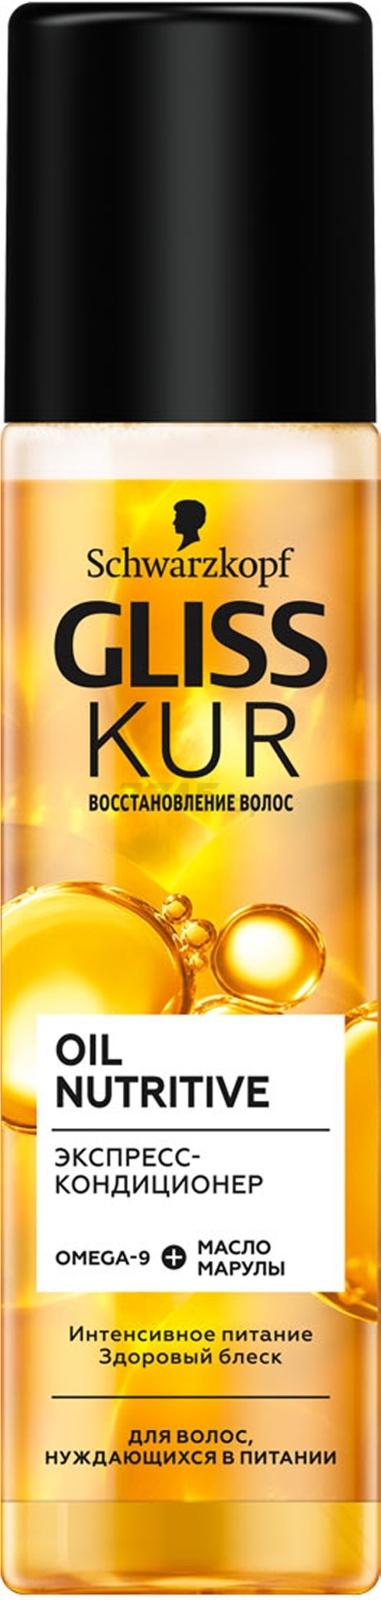 Экспресс-кондиционер GLISS KUR Oil Nutritive 200 мл (4015000529730) - Фото 4